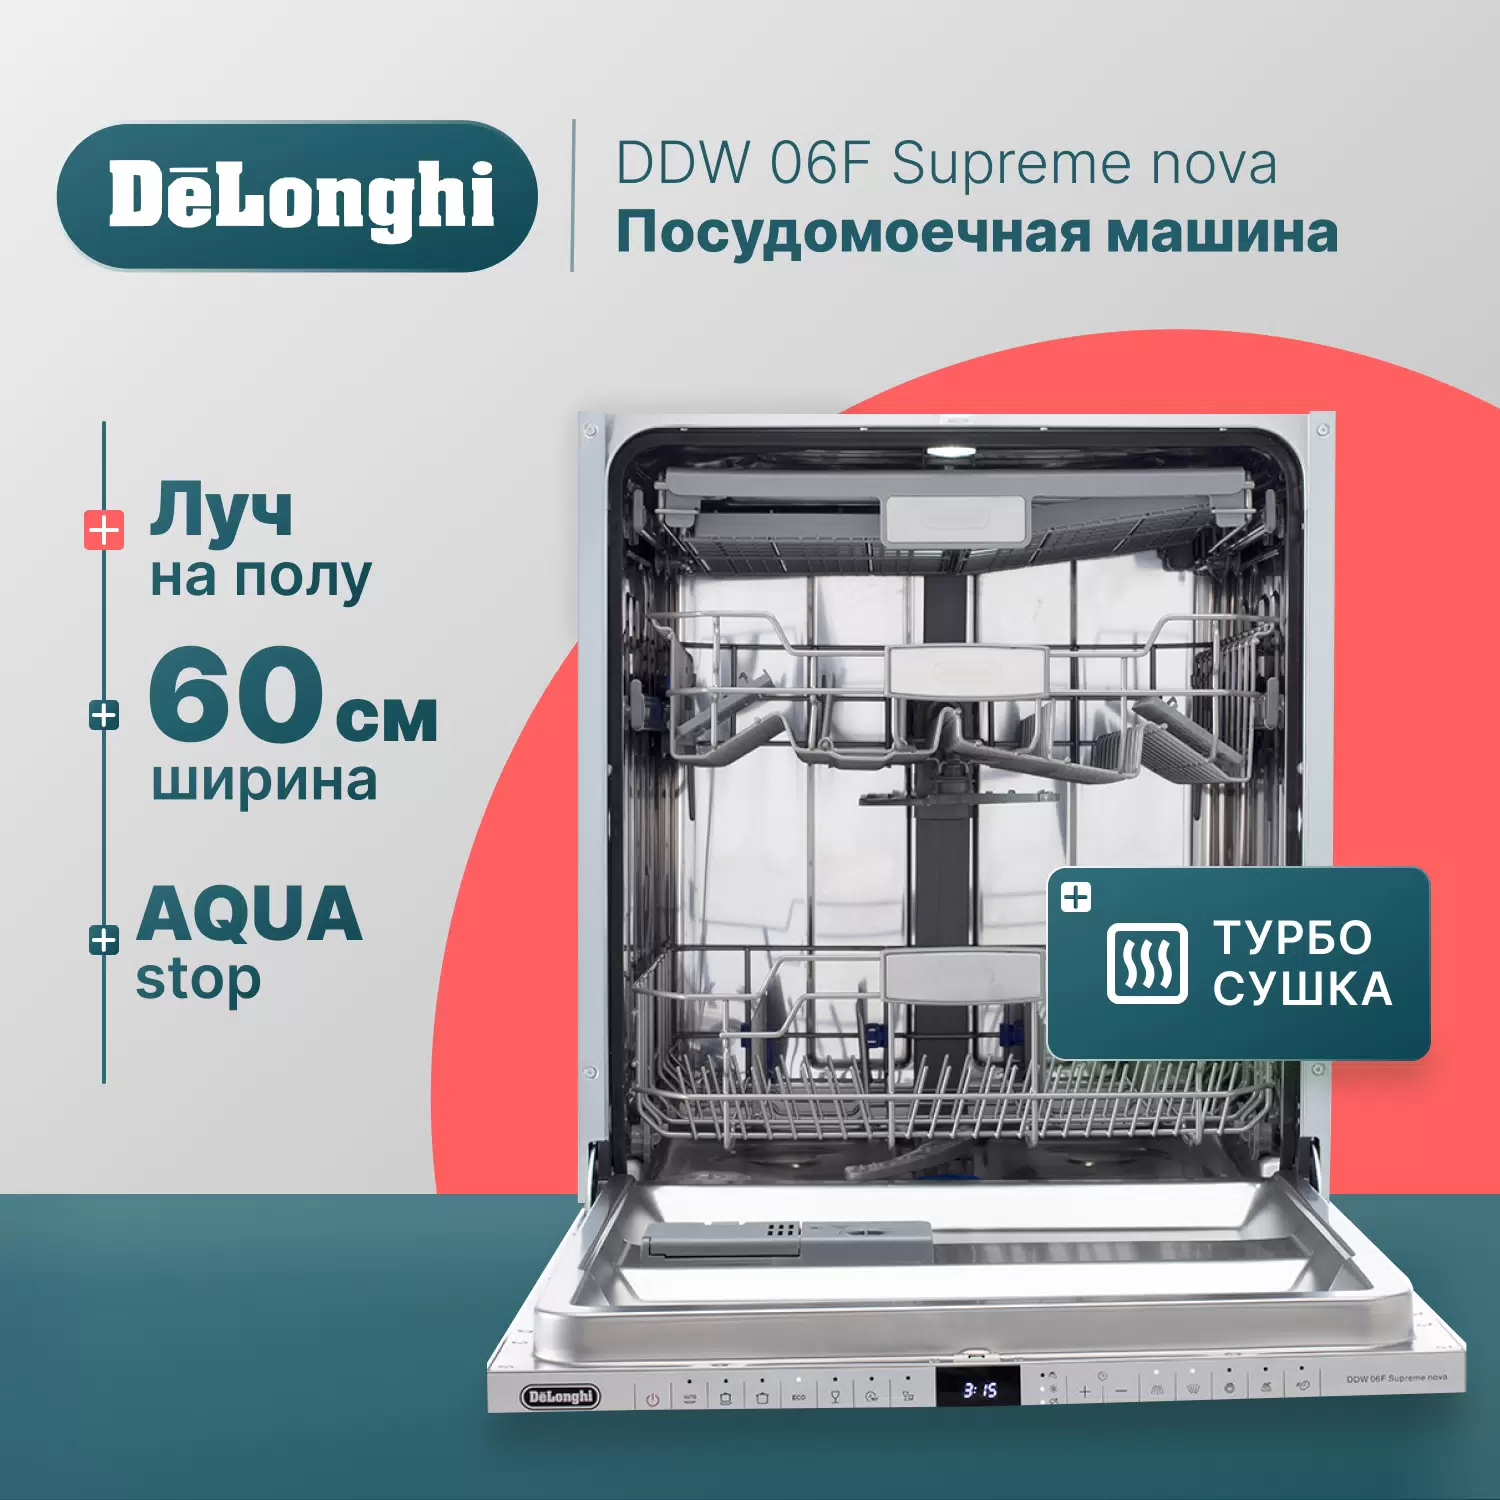 Встраиваемая посудомоечная машина Delonghi DDW 06 F Supreme nova - VLARNIKA в Донецке